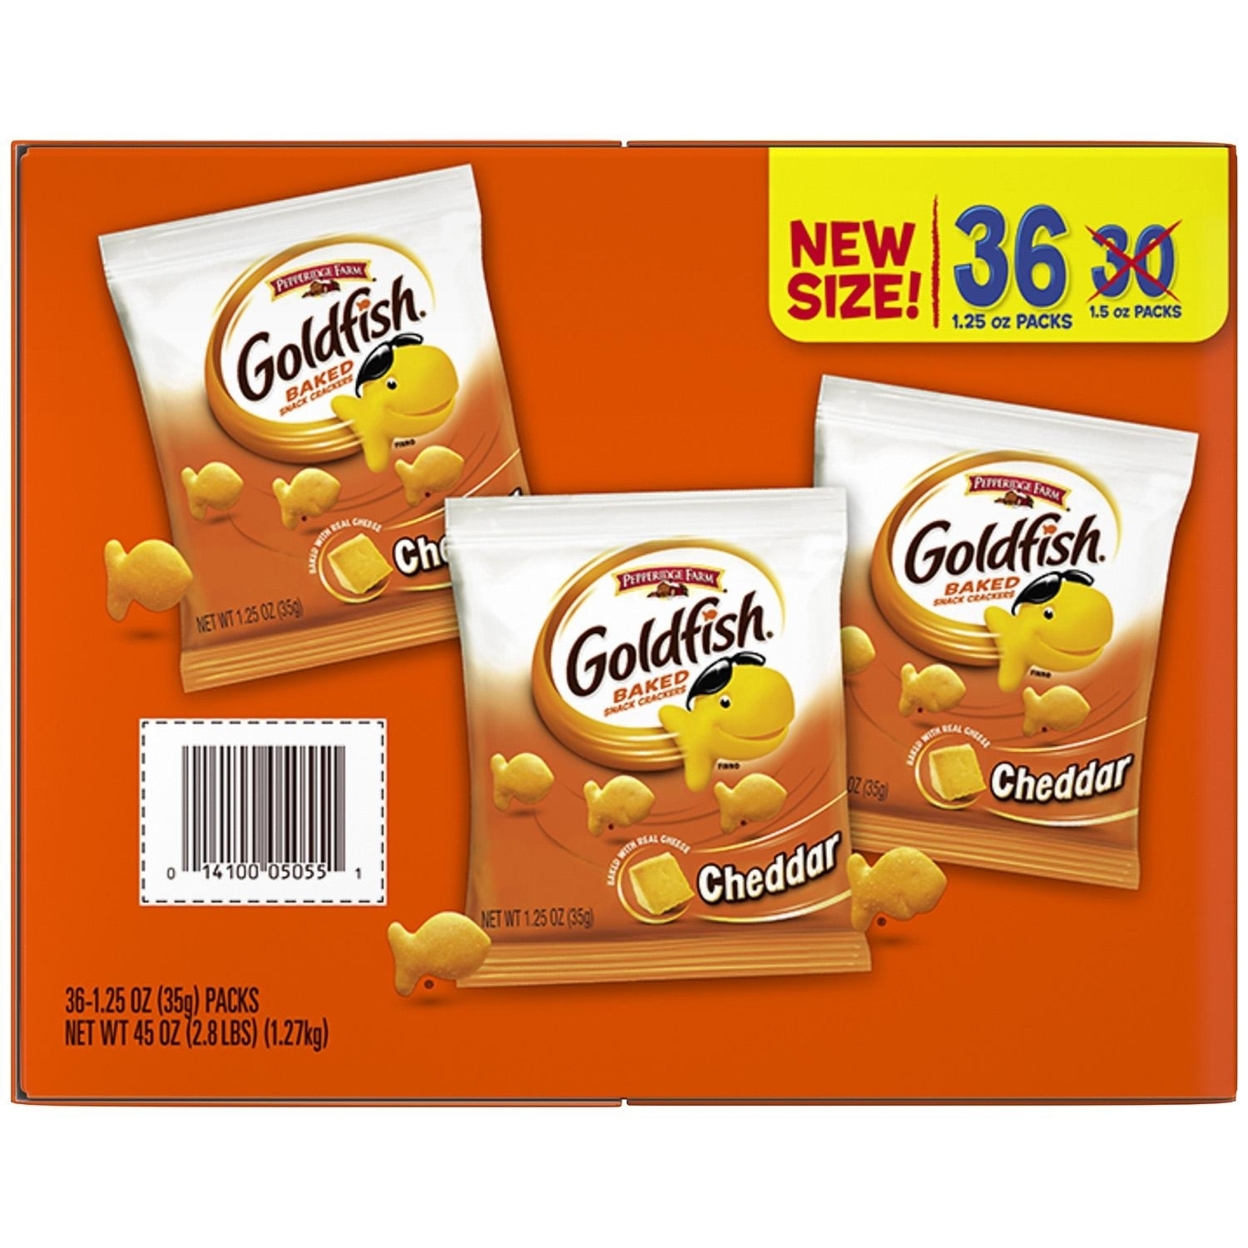 Pepperidge Farm Goldfish Cheddar Crackers, 1.25 Ounce (36 Count)